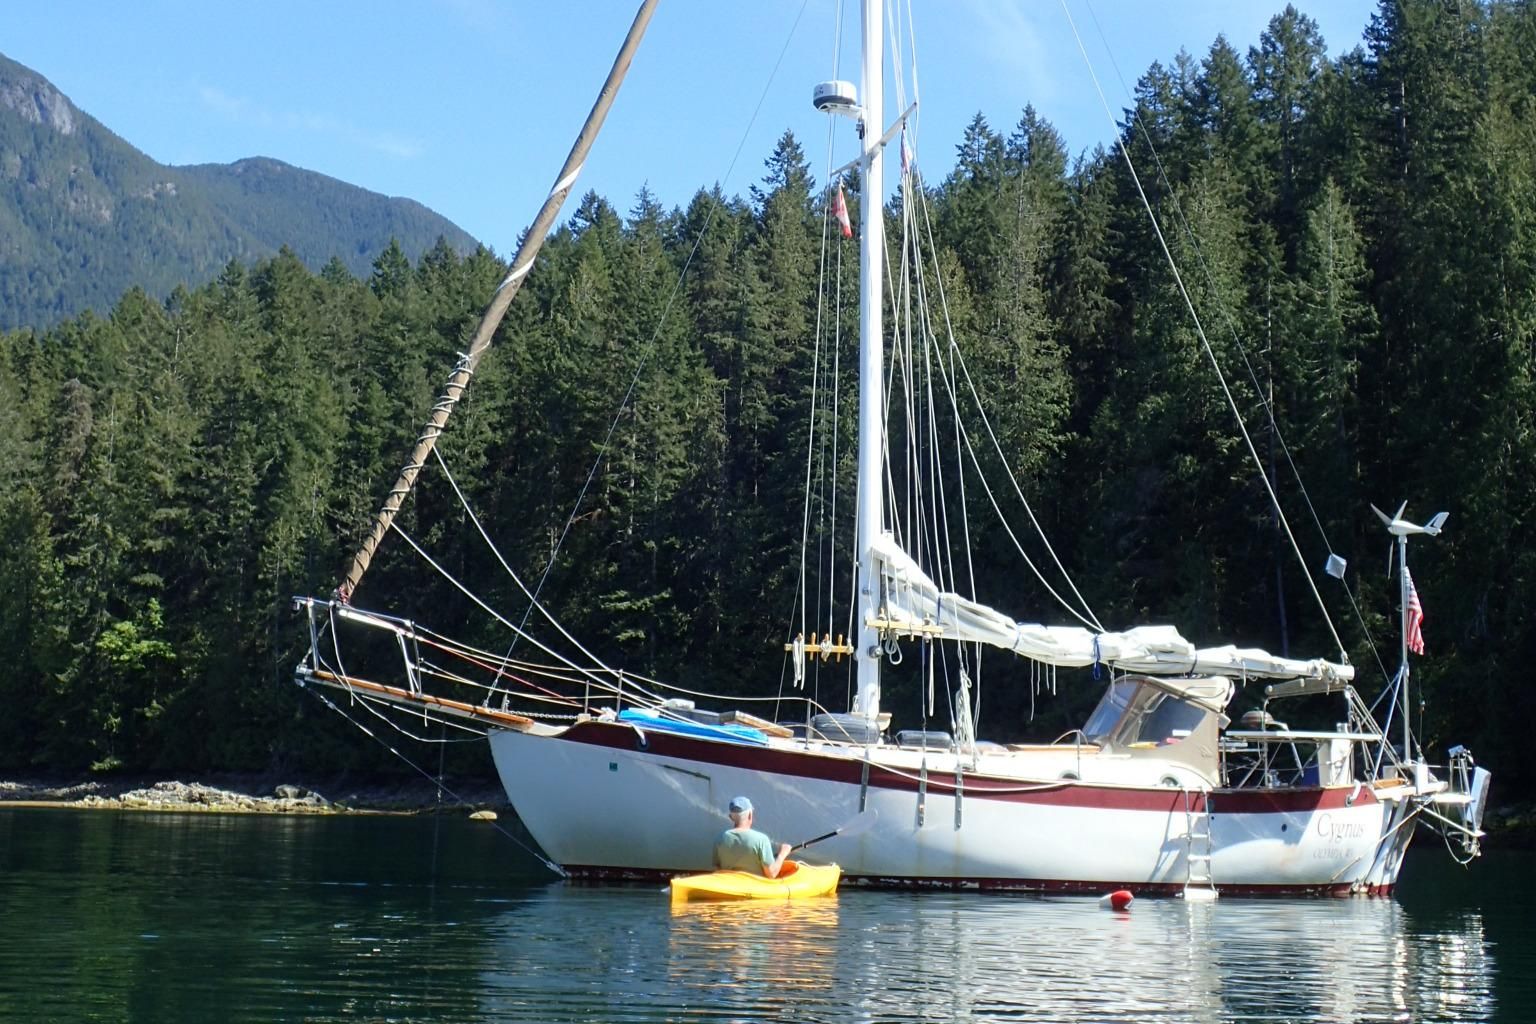 westsail 32 cutter rigged sailboat